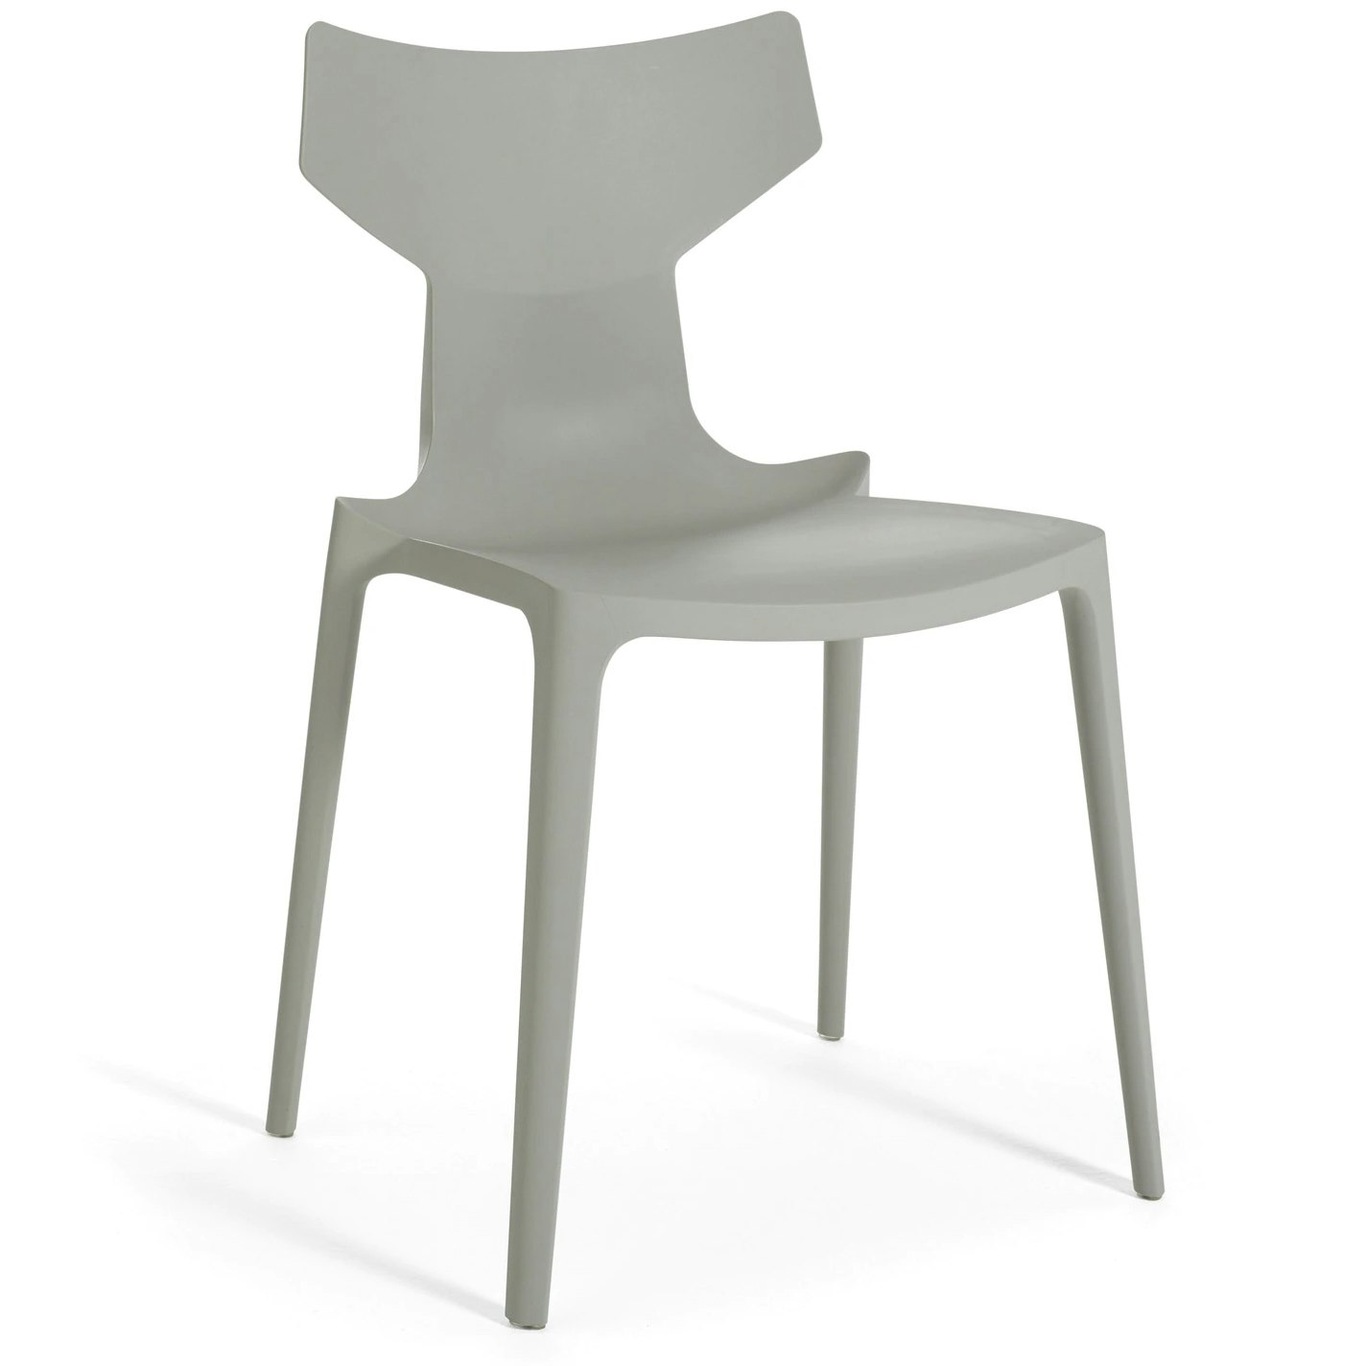 Re-Chair Chair, Grey